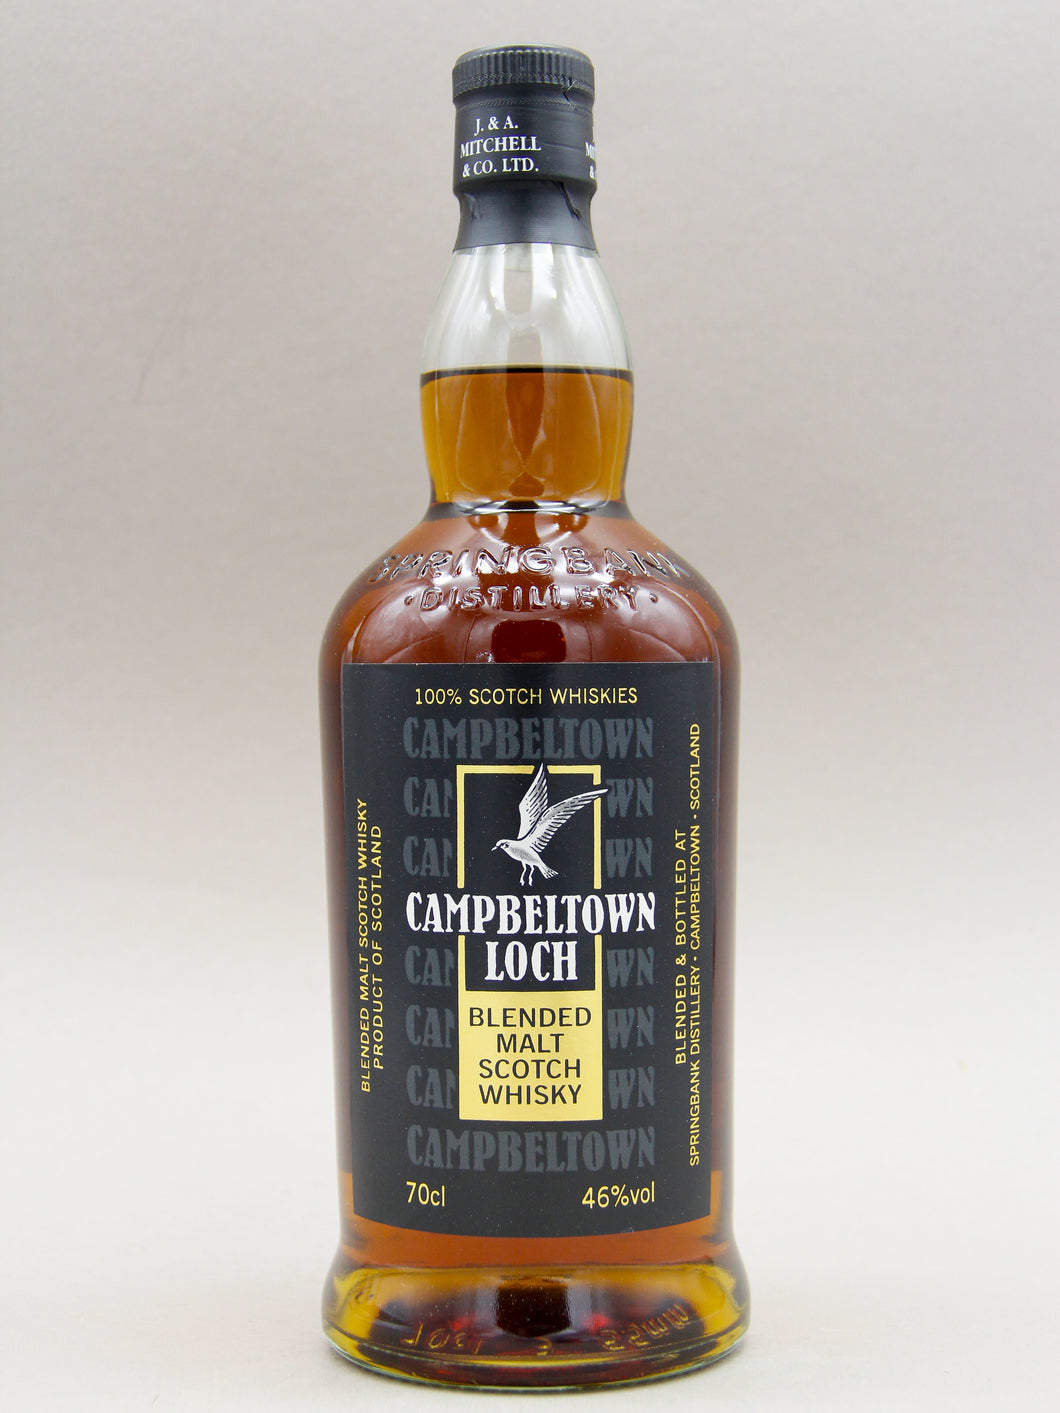 Campbeltown Loch, Campbeltown Blended Malt Scotch Whisky (46%, 70cl)